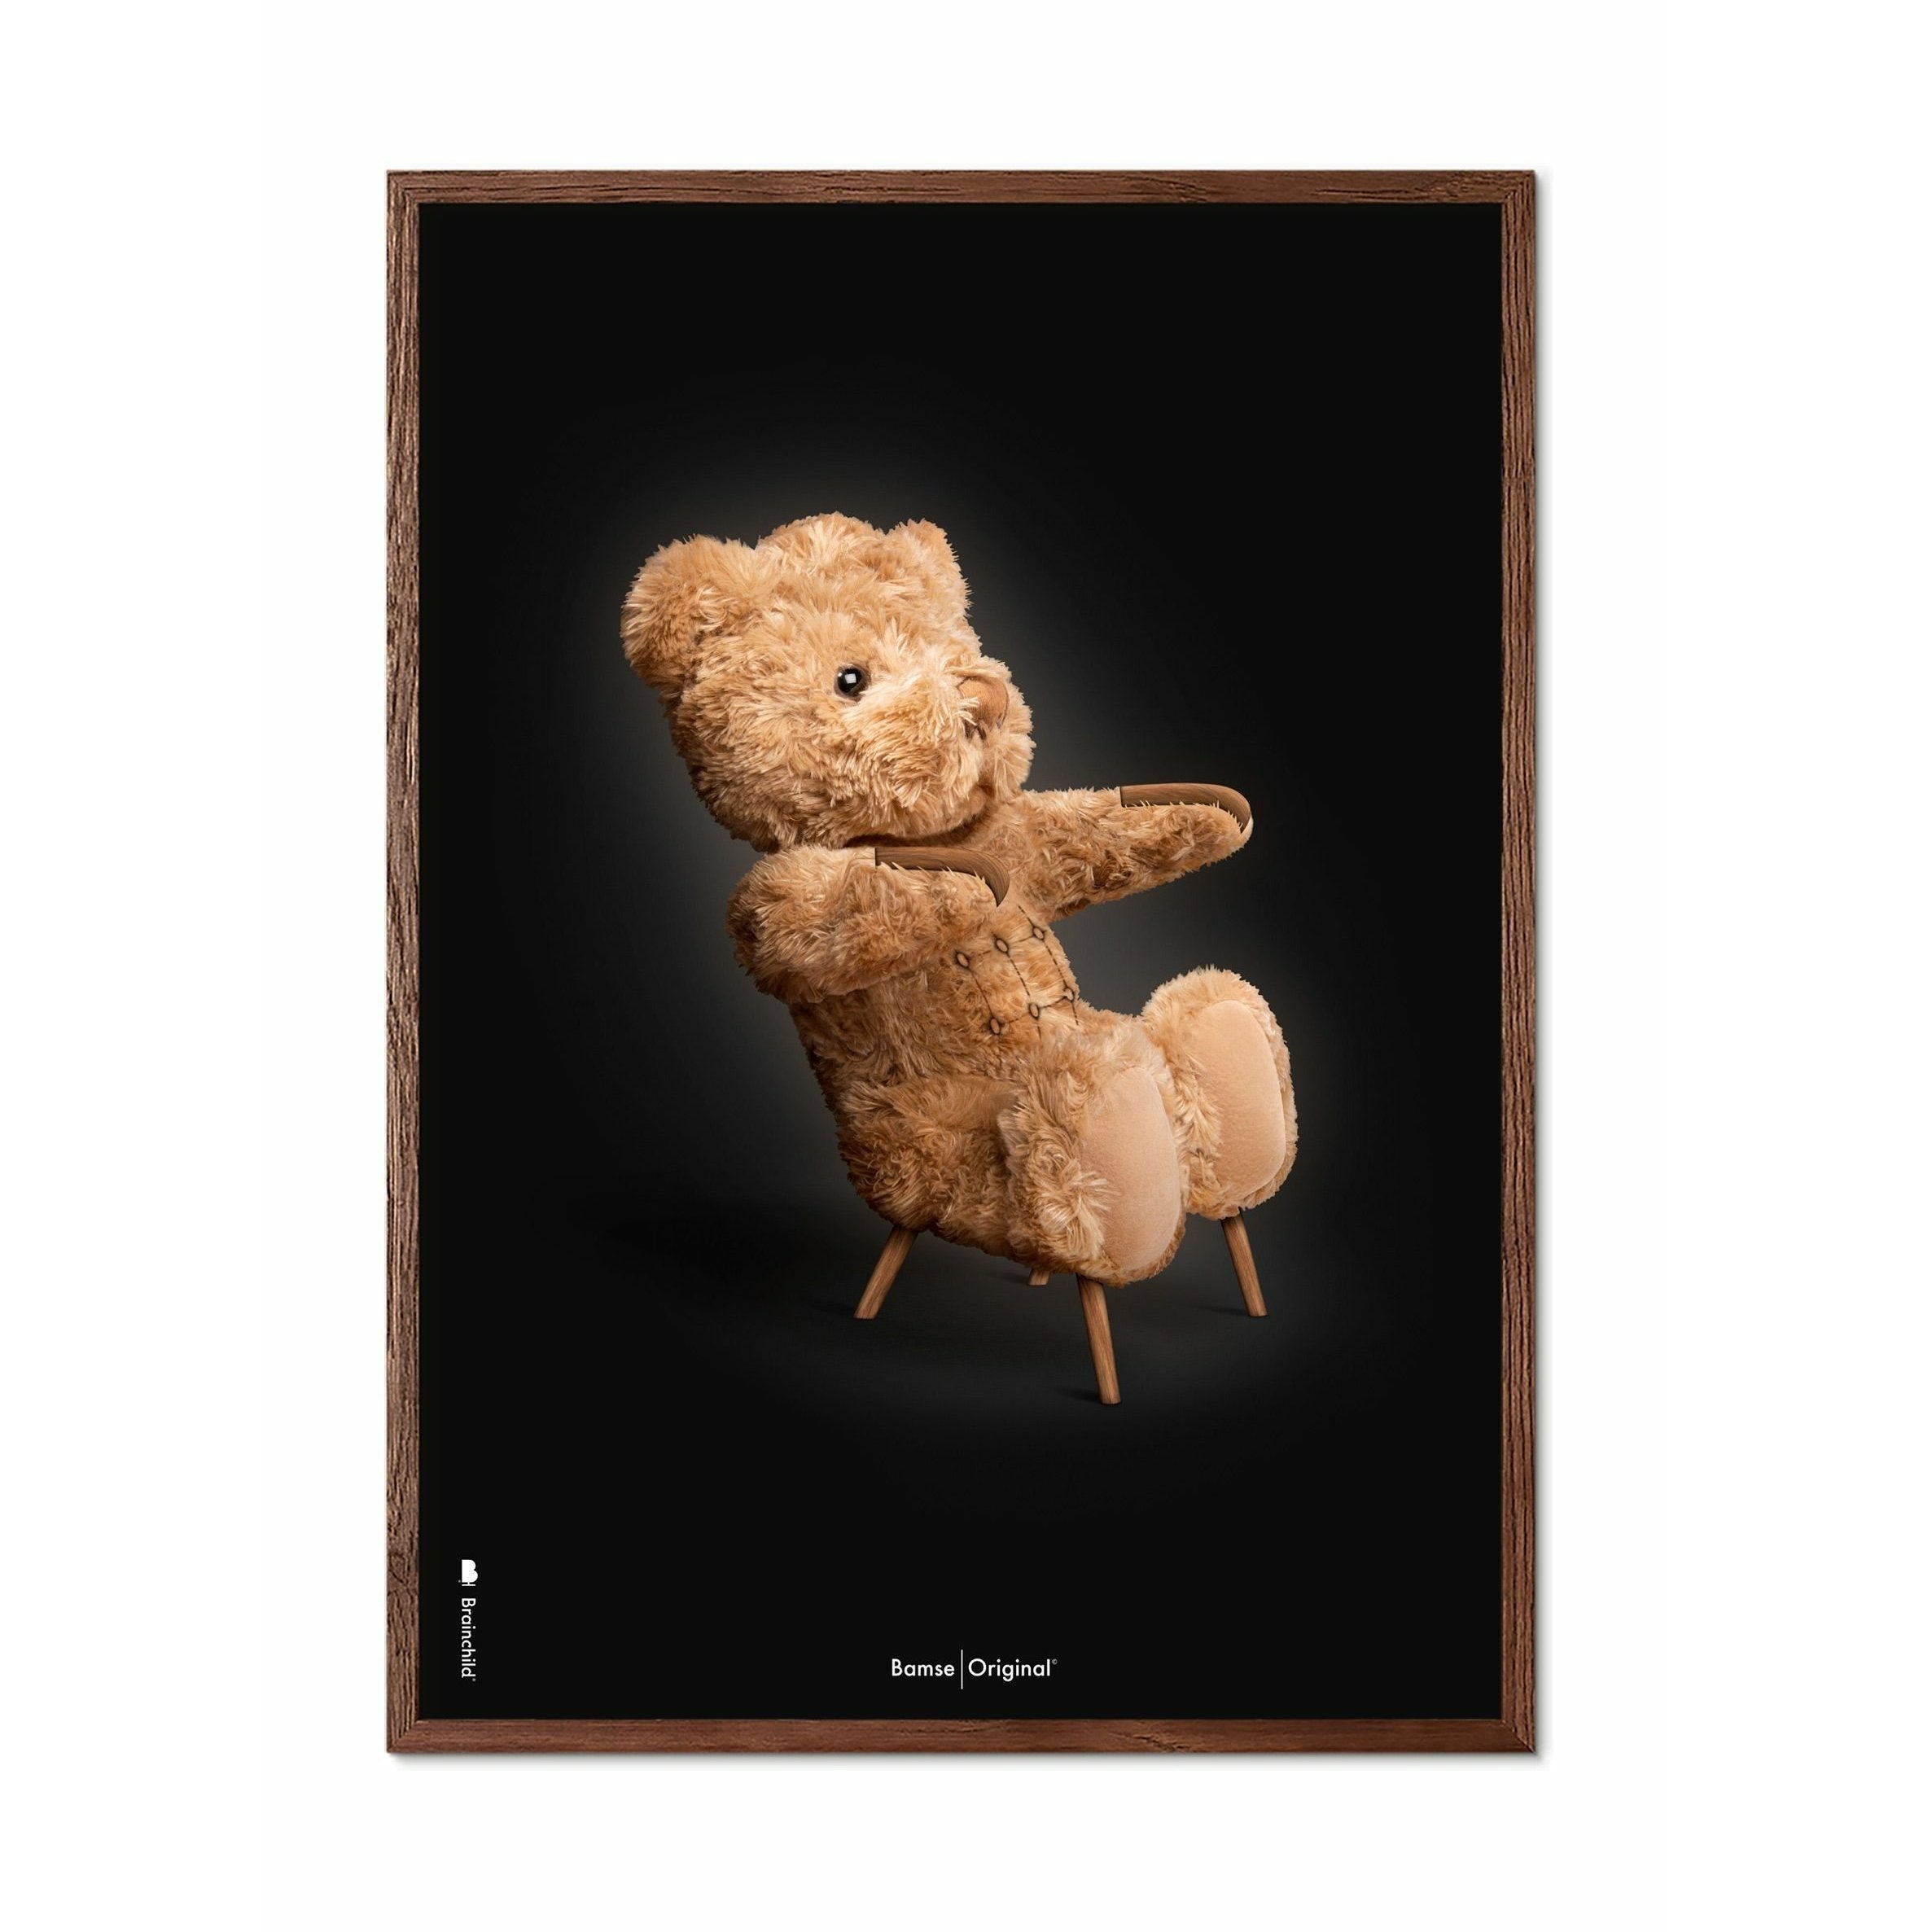 Brainchild Teddy Bear Classic Poster, Frame Made Of Dark Wood 50x70 Cm, Black Background